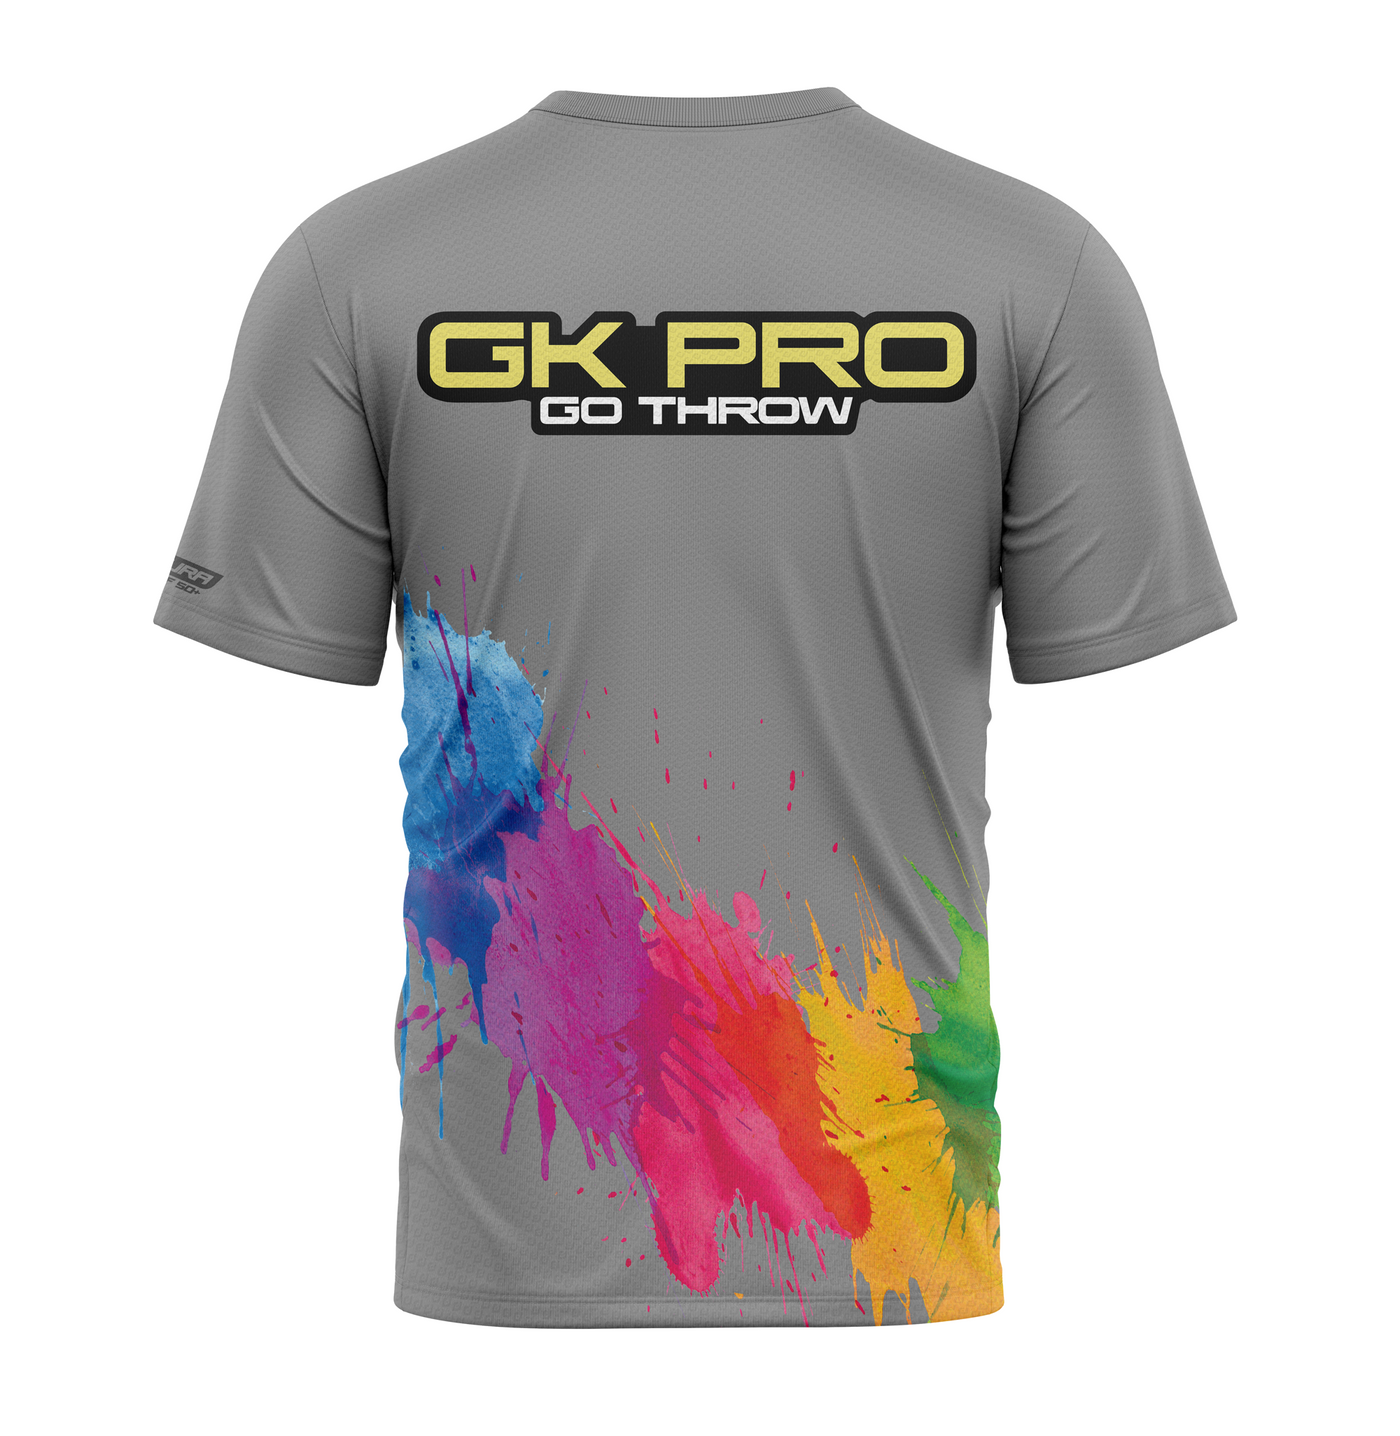 GK Pro OTB Skins Jersey - Limited Run